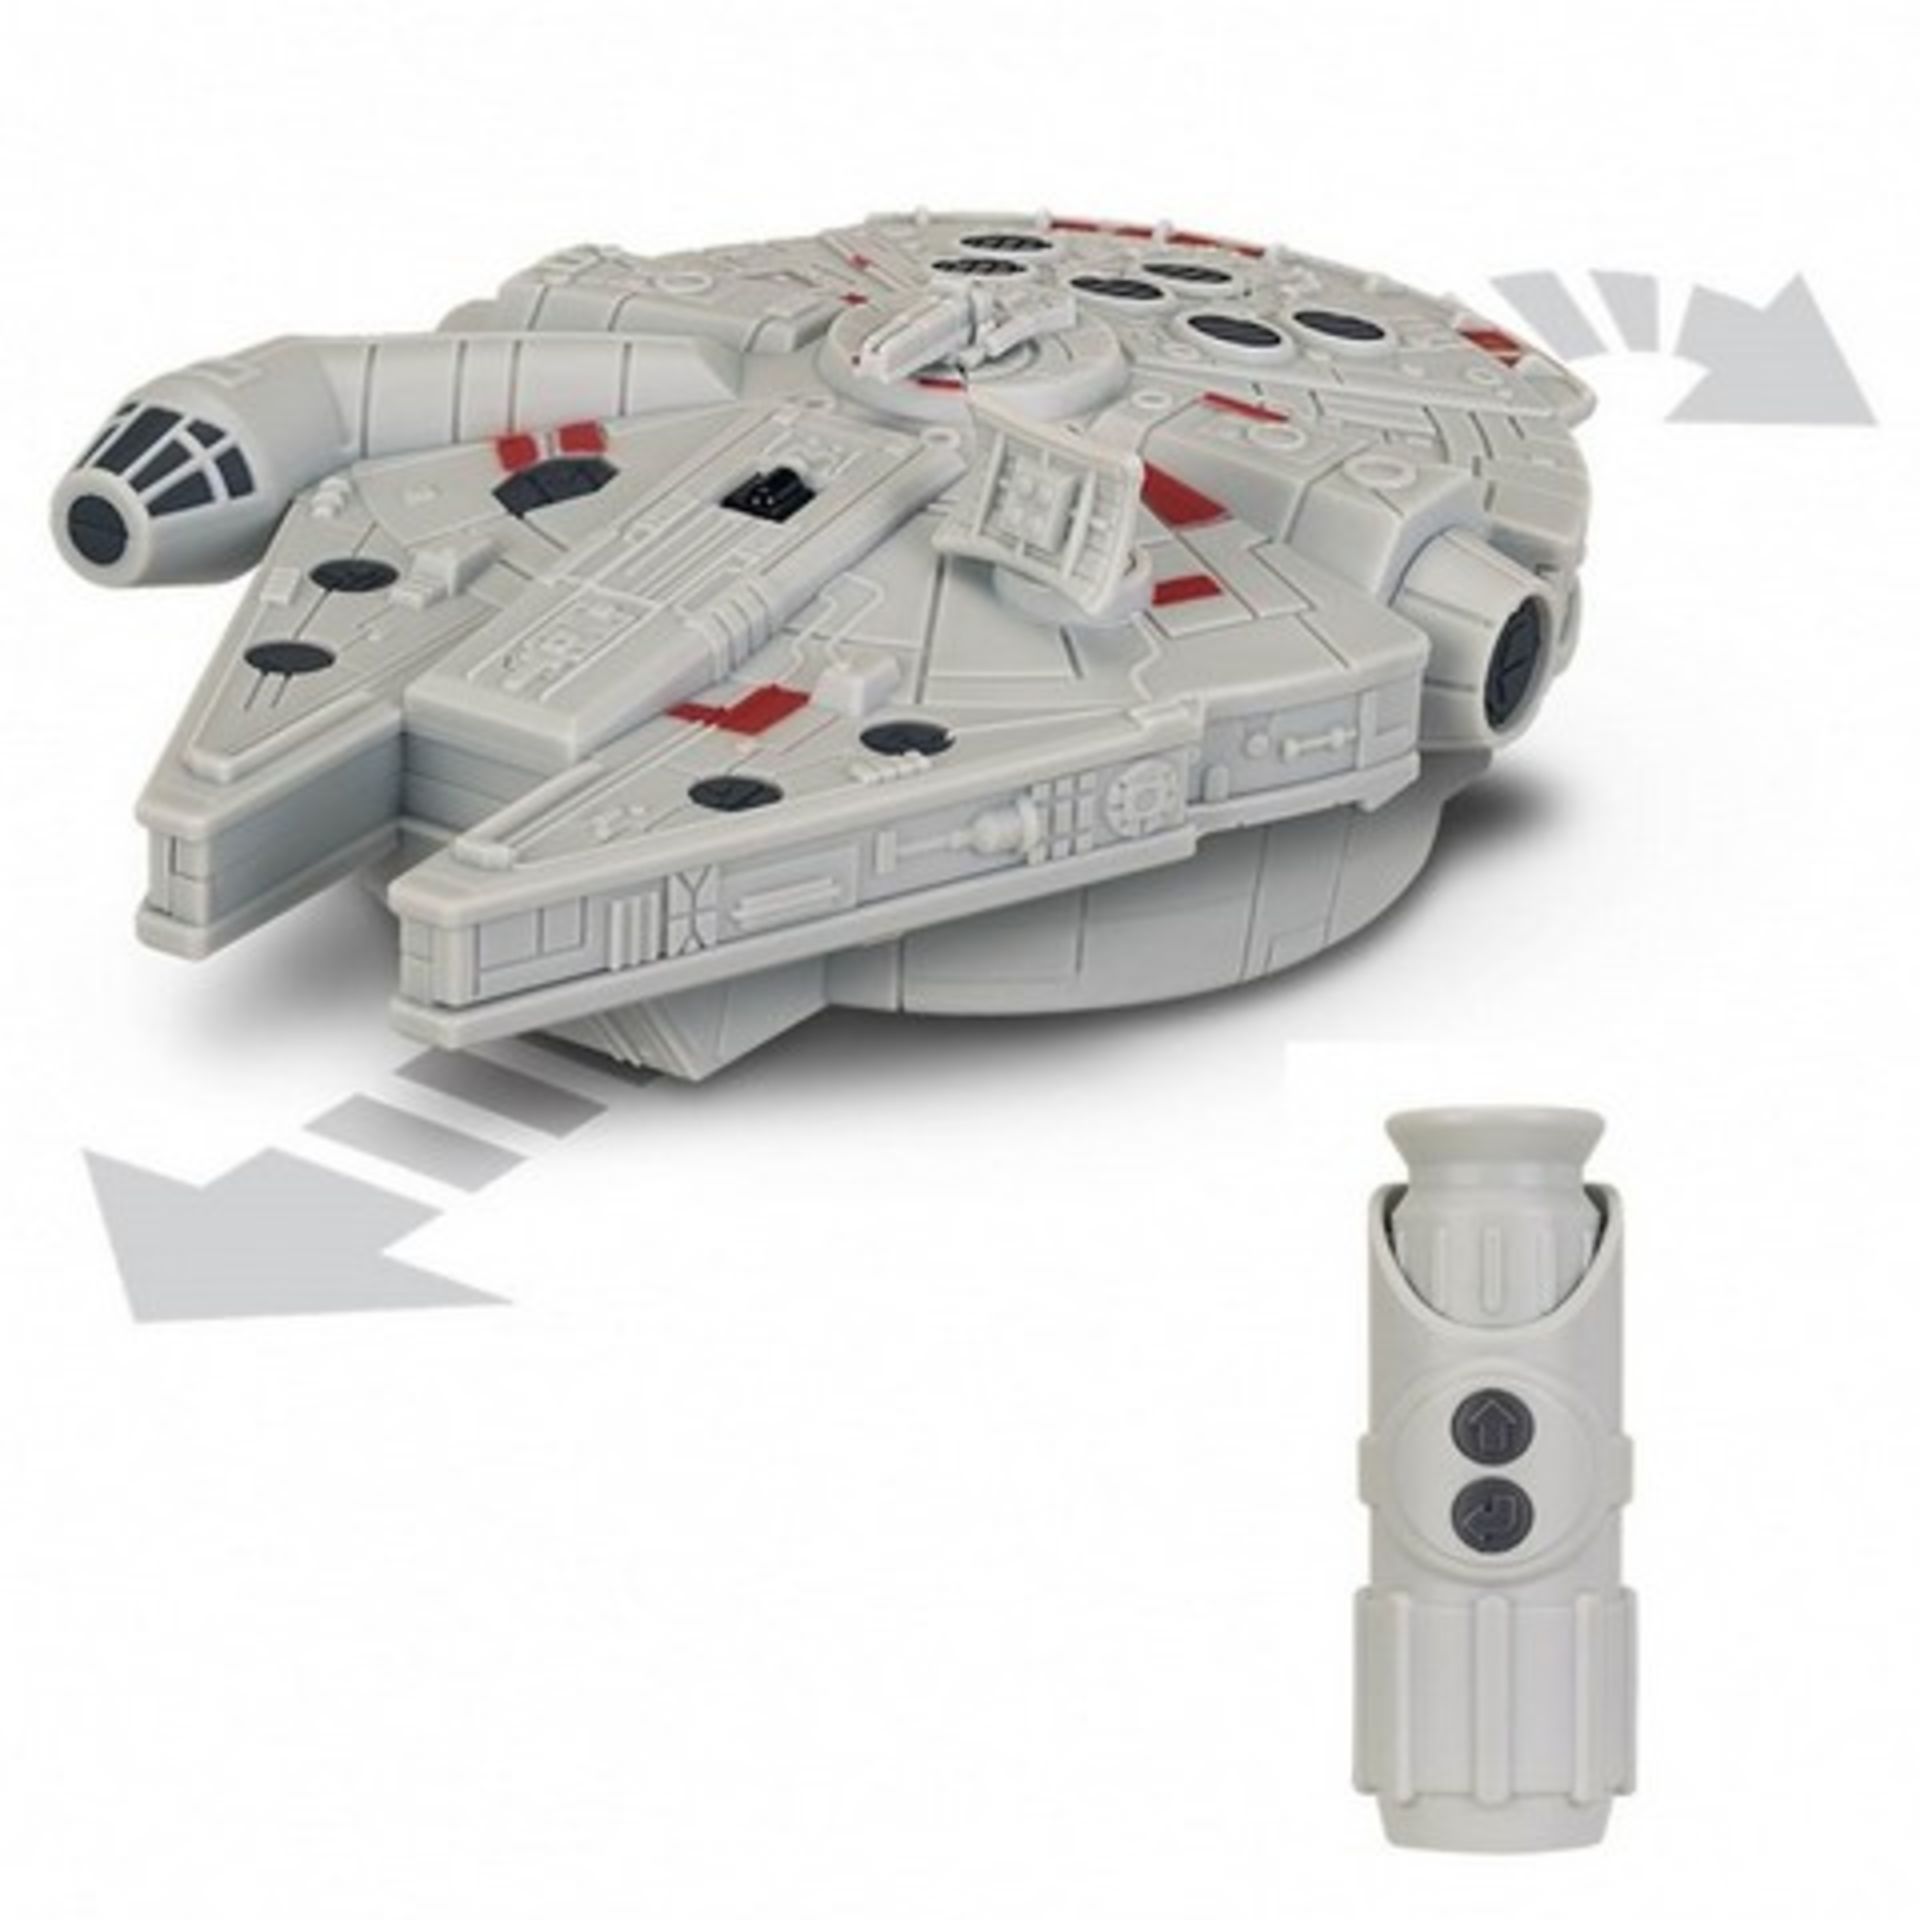 V Brand New Star Wars Millennium Falcon Remote Control Vehicle Amazon Price £23.91 - Image 2 of 2